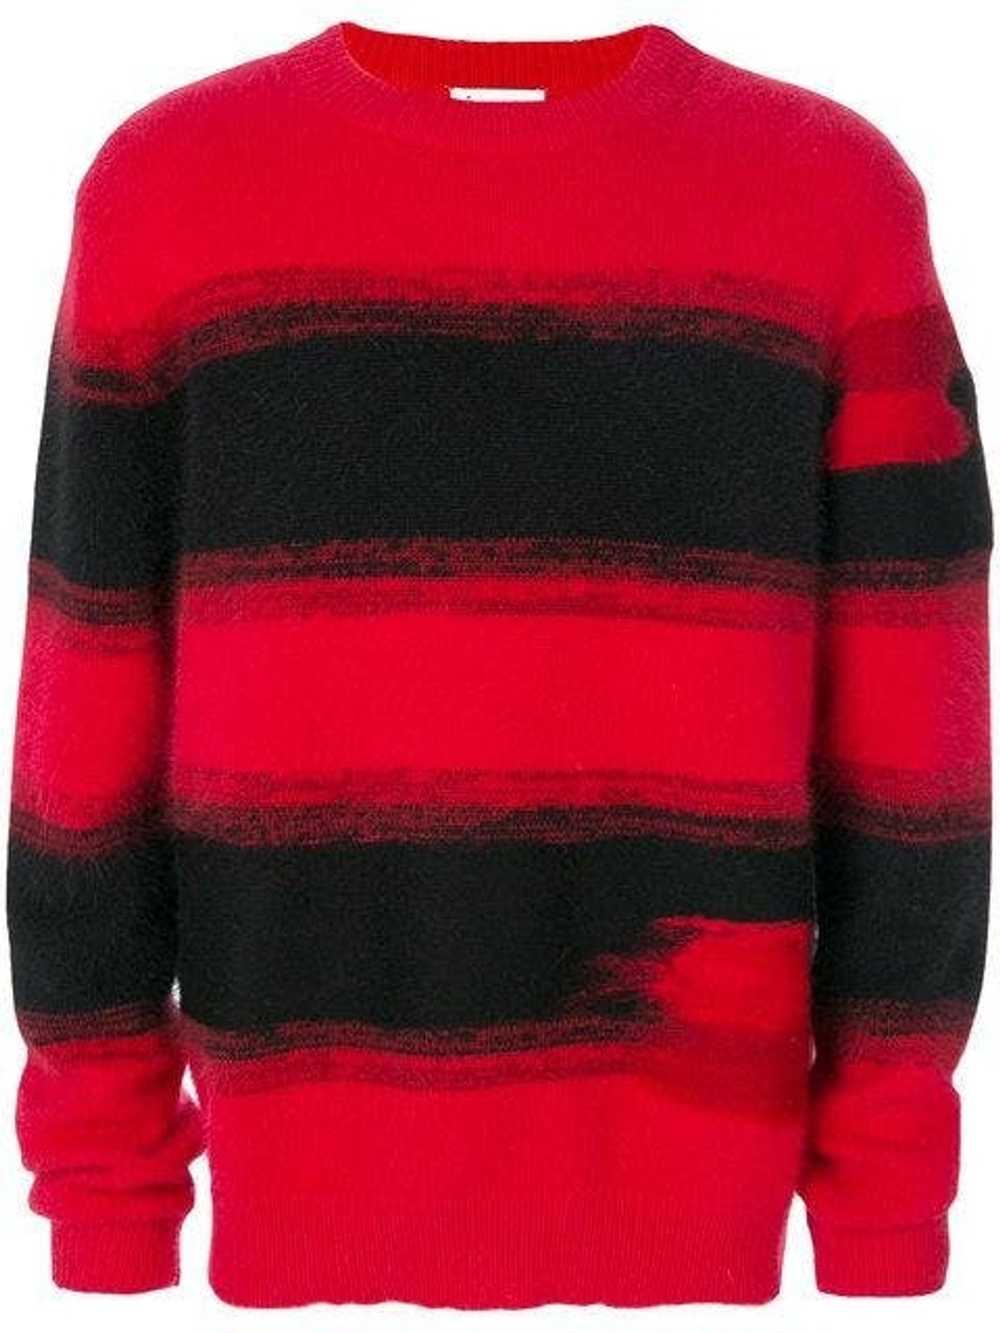 Etudes Fall Winter 2017 Red Angora Sweater - image 4